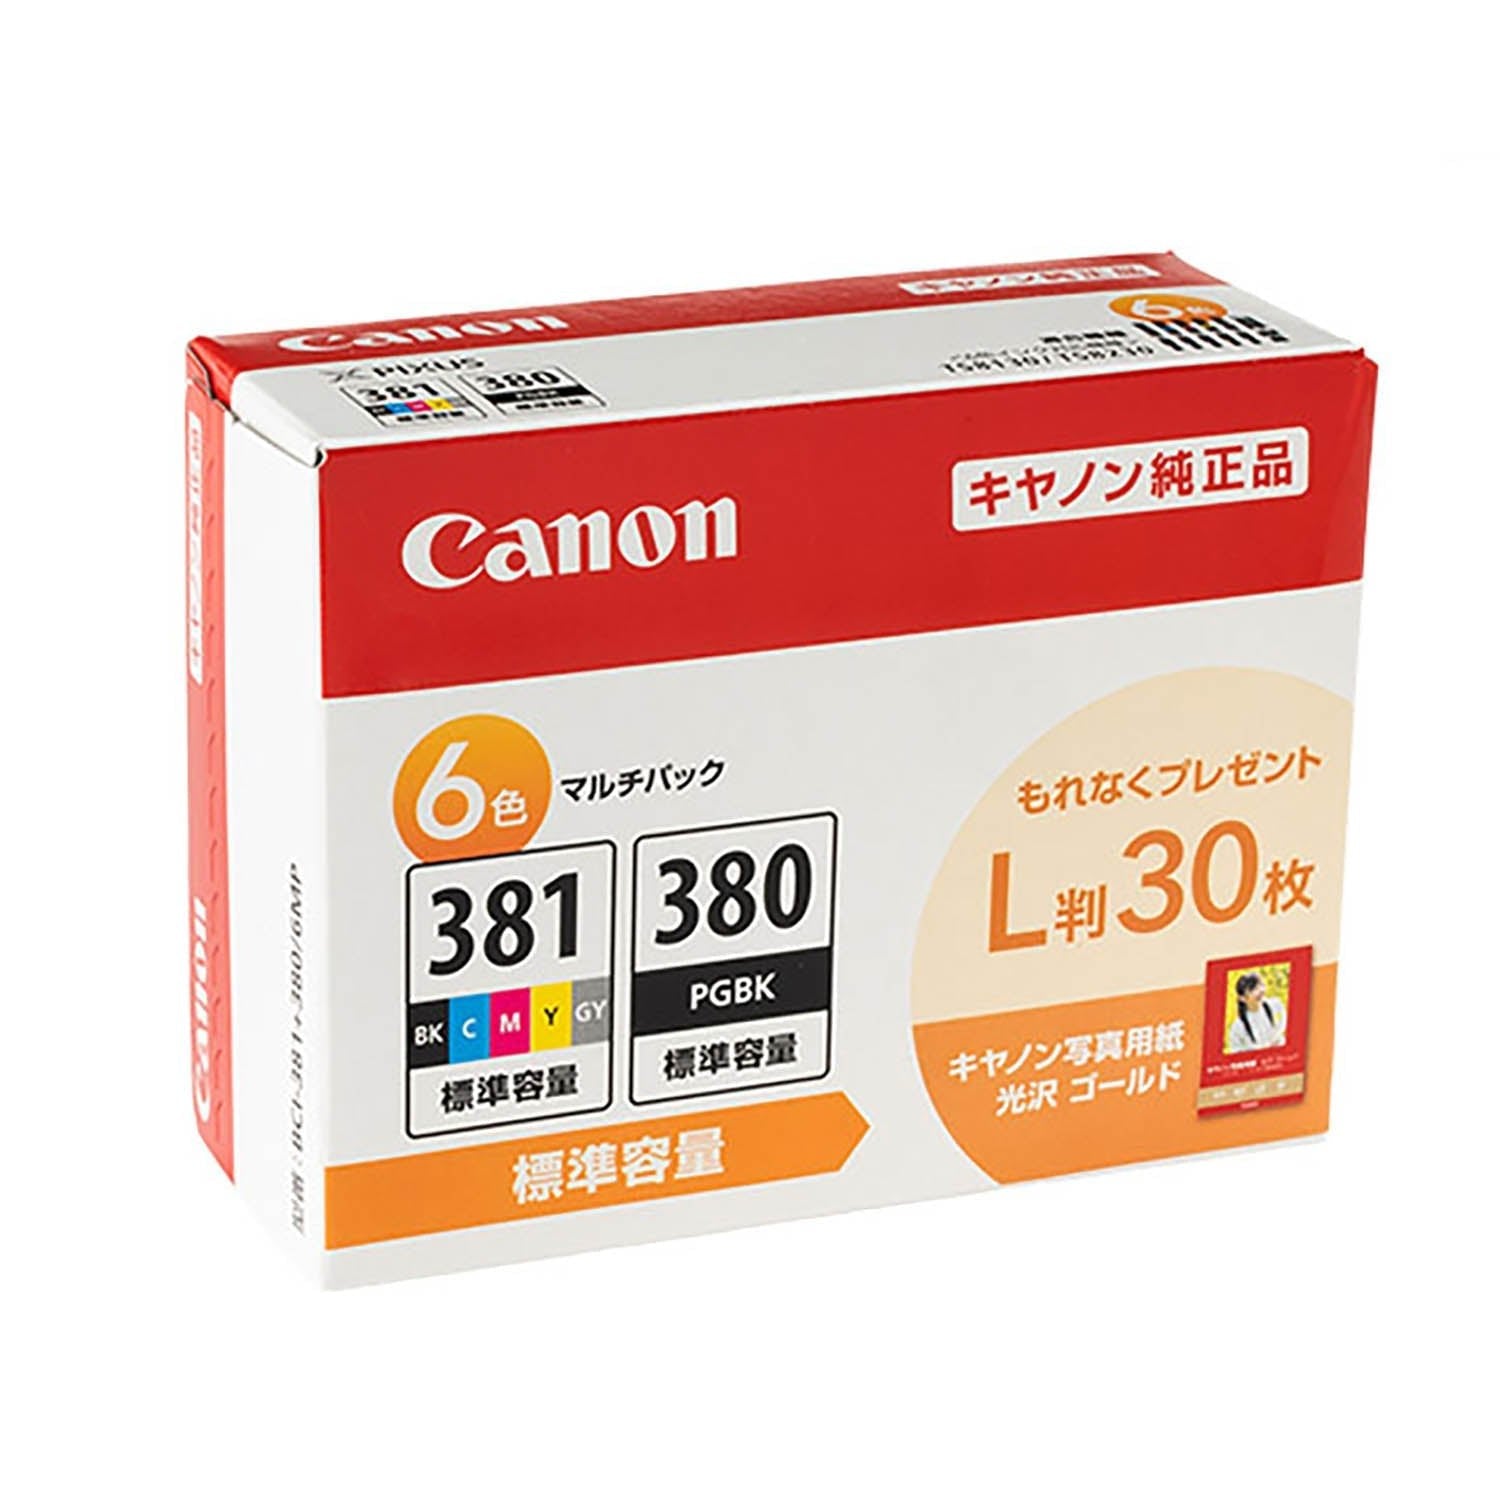 Canon インク 純正品 6色 381 380 標準容量 2箱